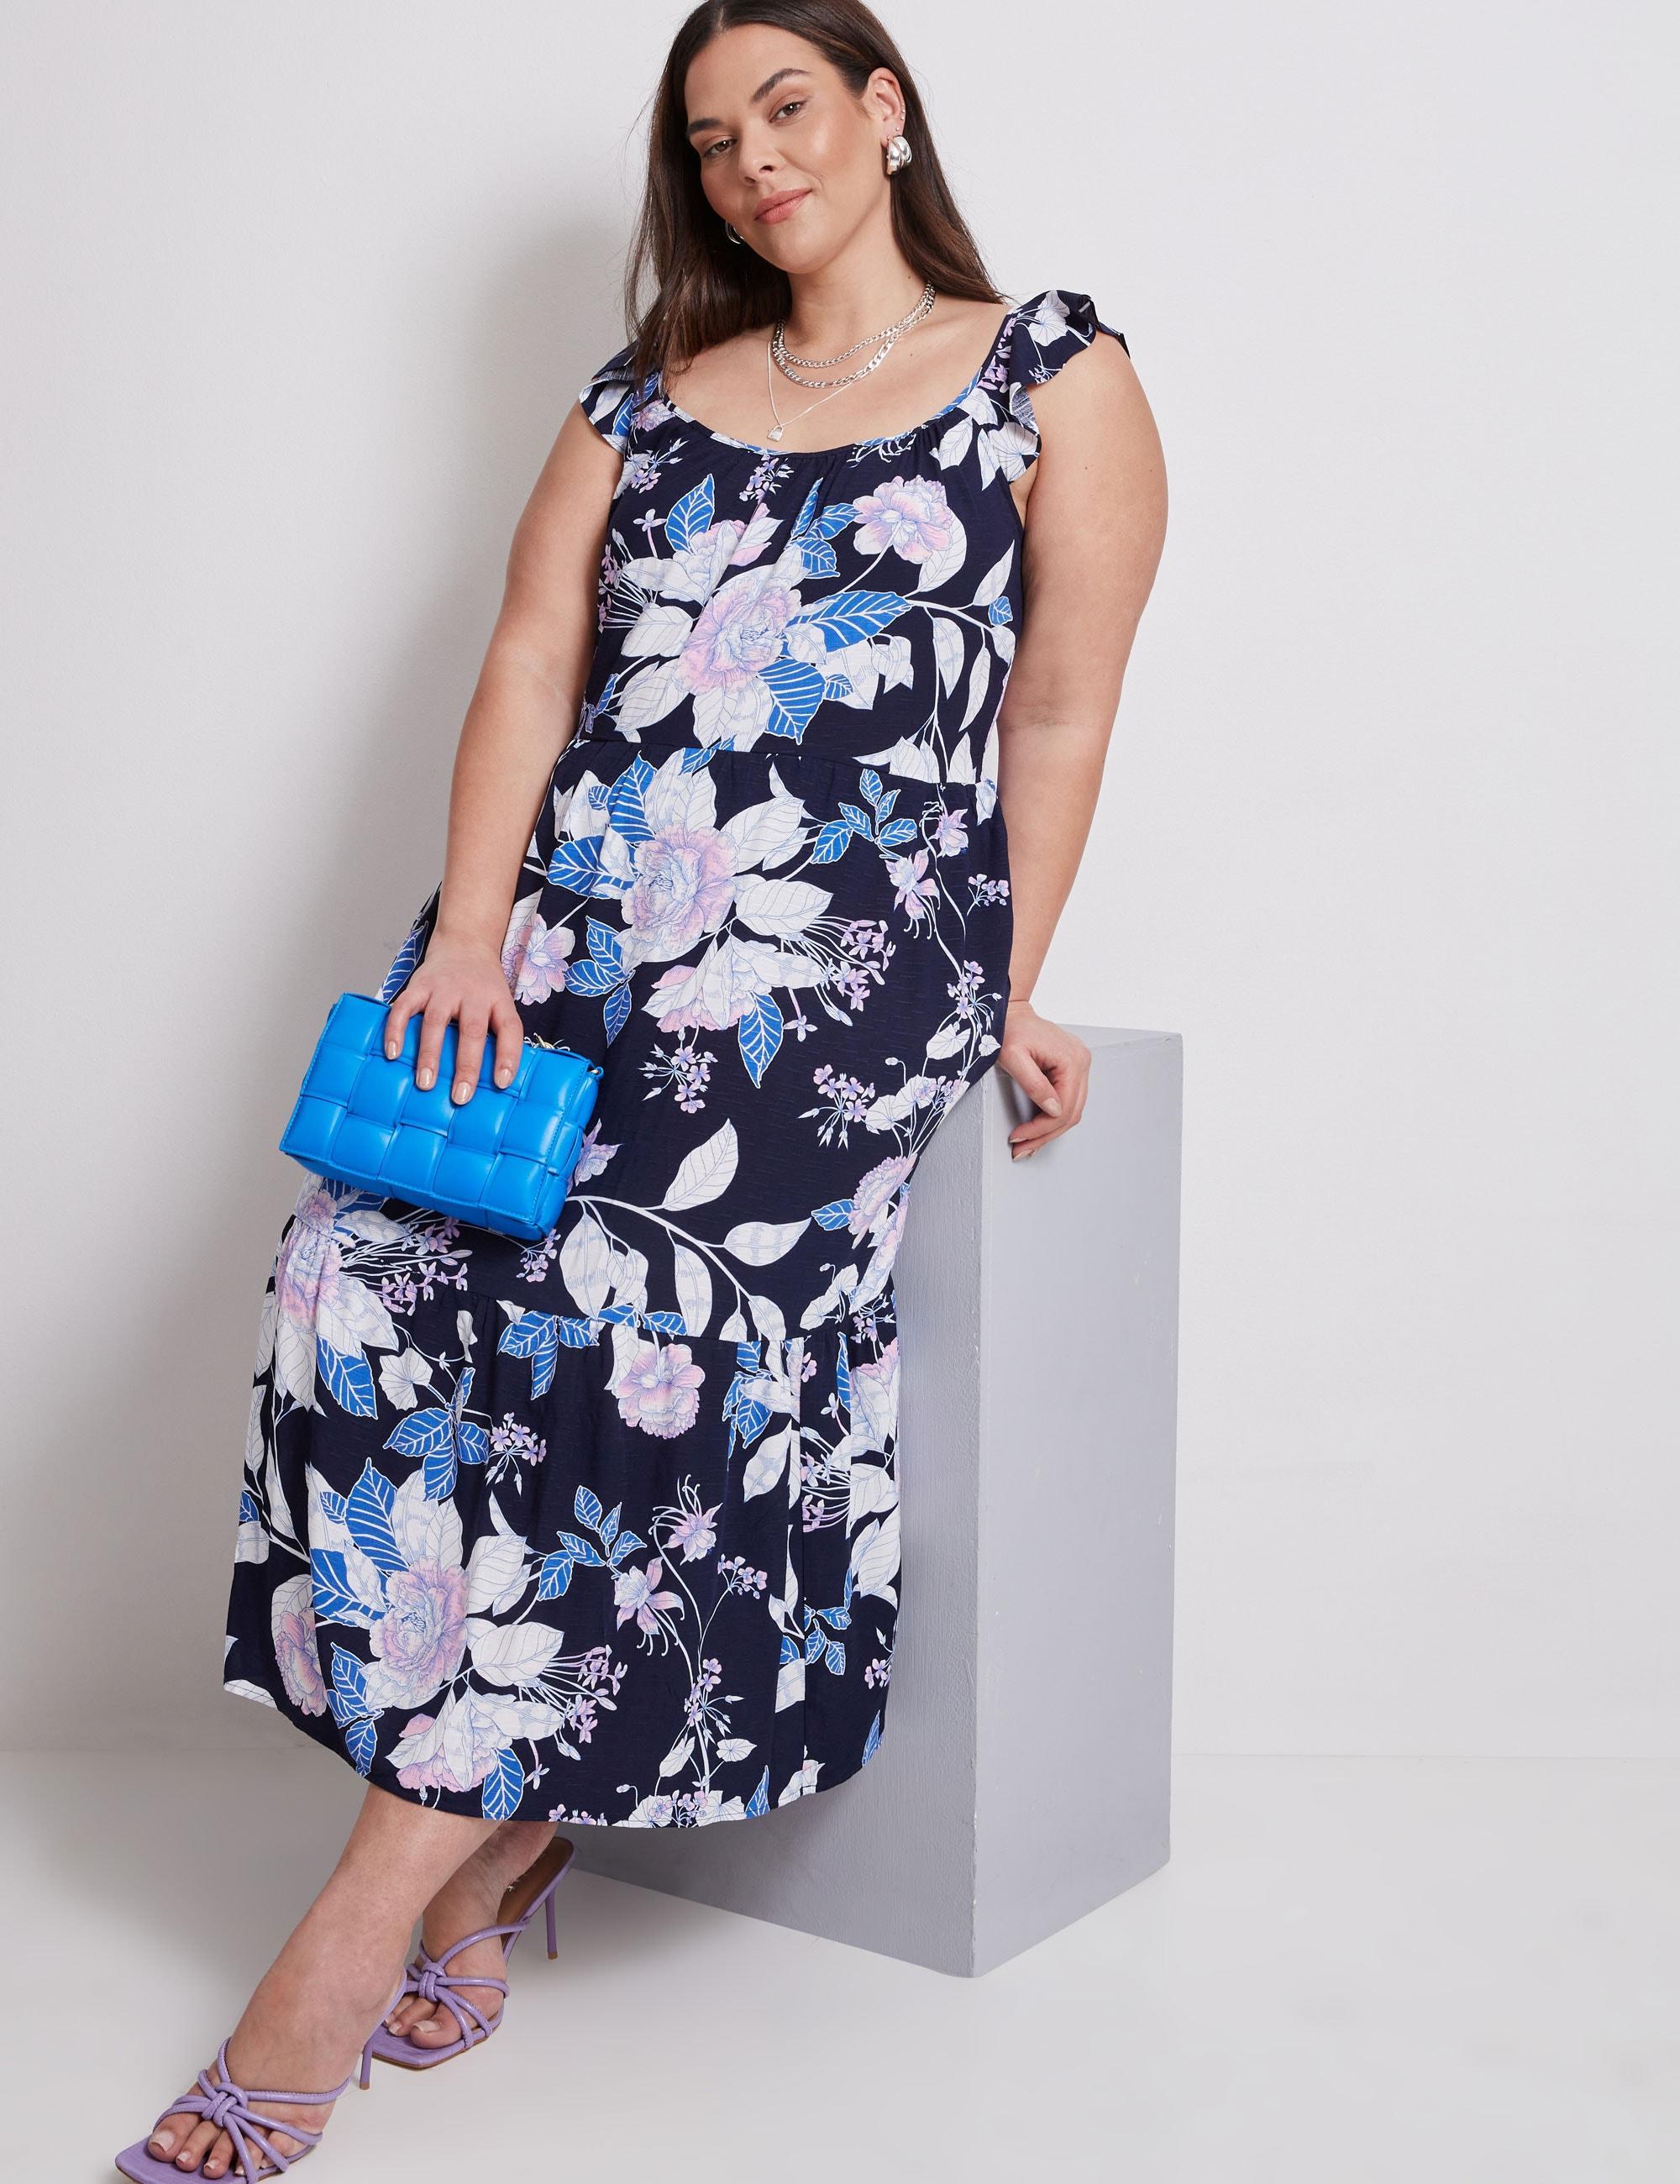 AUTOGRAPH - Plus Size - Womens Maxi Dress - Blue - Summer Floral A Line Dresses - Ocean - Sleeveless - Florals - Flutter Cap Sleeve Women's Clothing